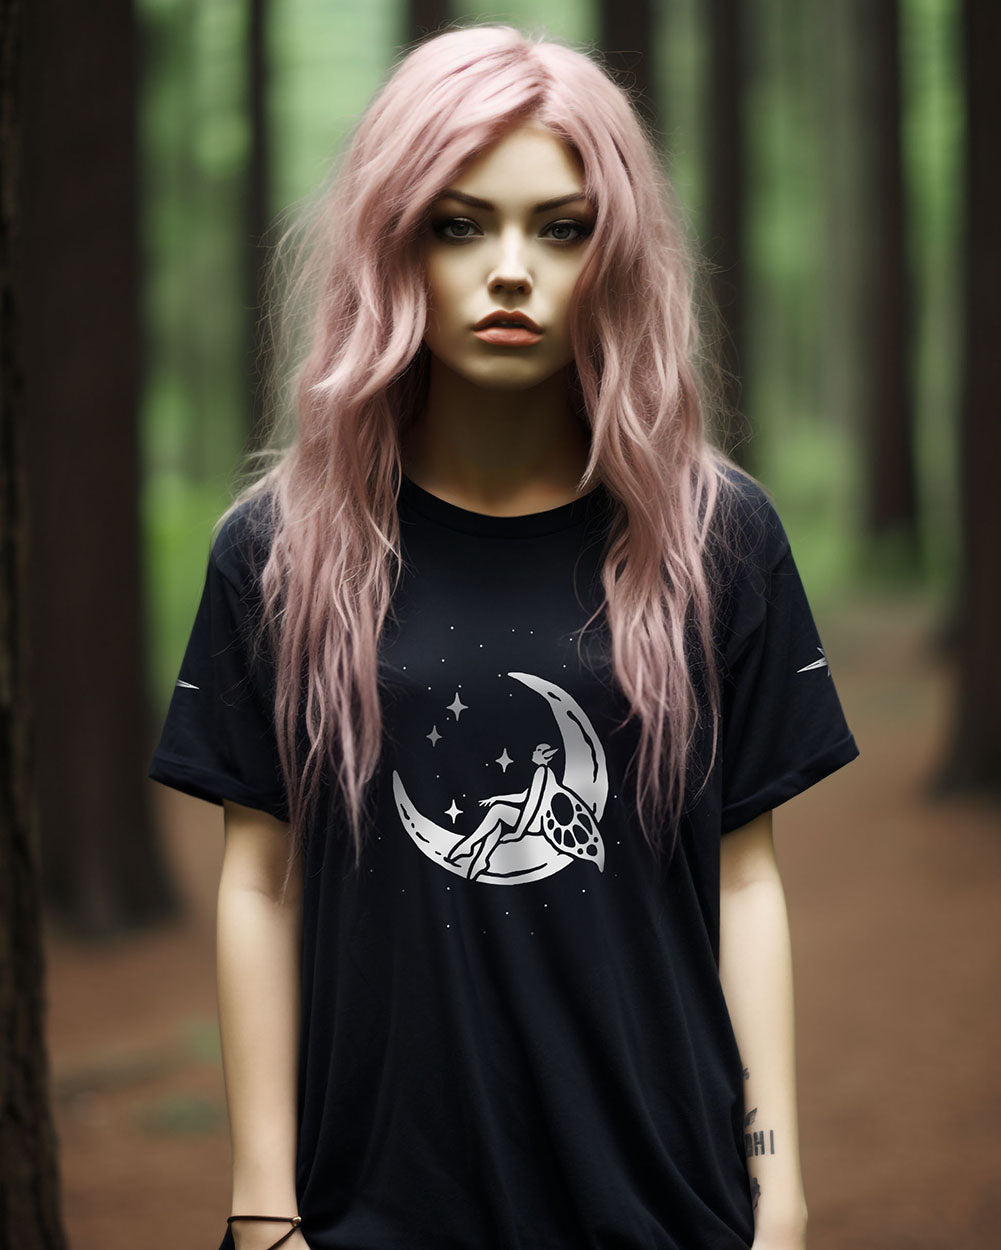 Pixie Moon Unisex Vegan Tee - Fairy Witchy Gothic Grunge Style - Alternative Occult Ethical Clothing - On Demand Eco-friendly Sustainable Fashion